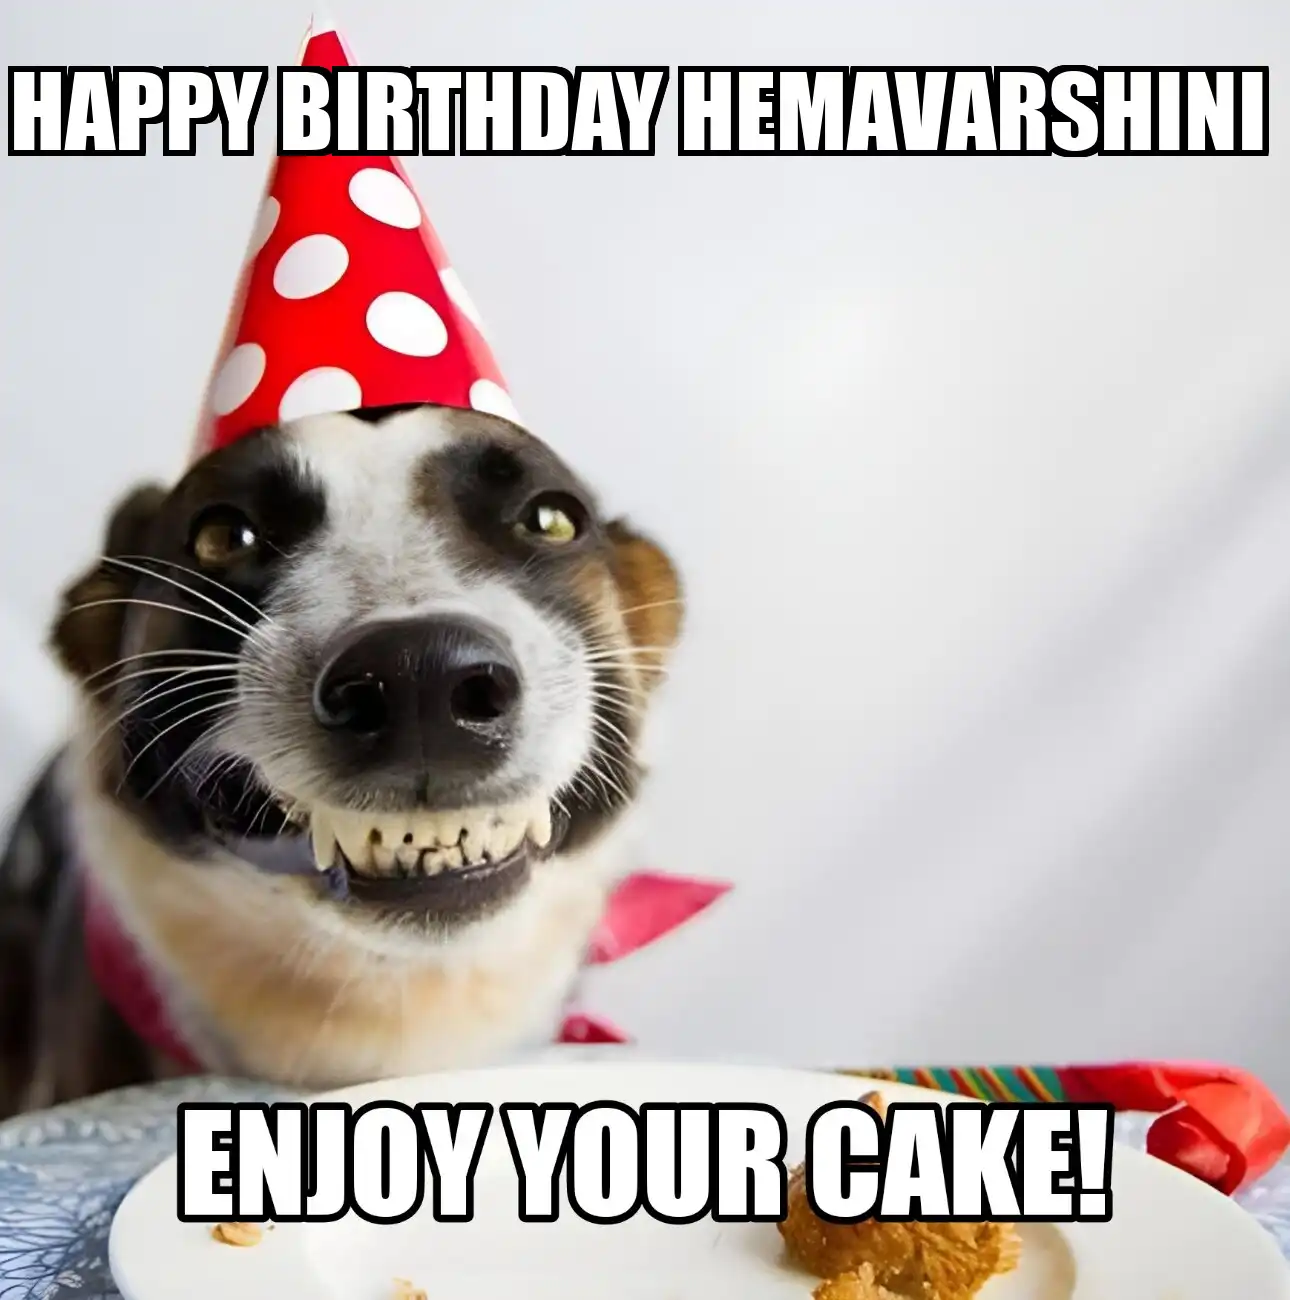 Happy Birthday Hemavarshini Enjoy Your Cake Dog Meme